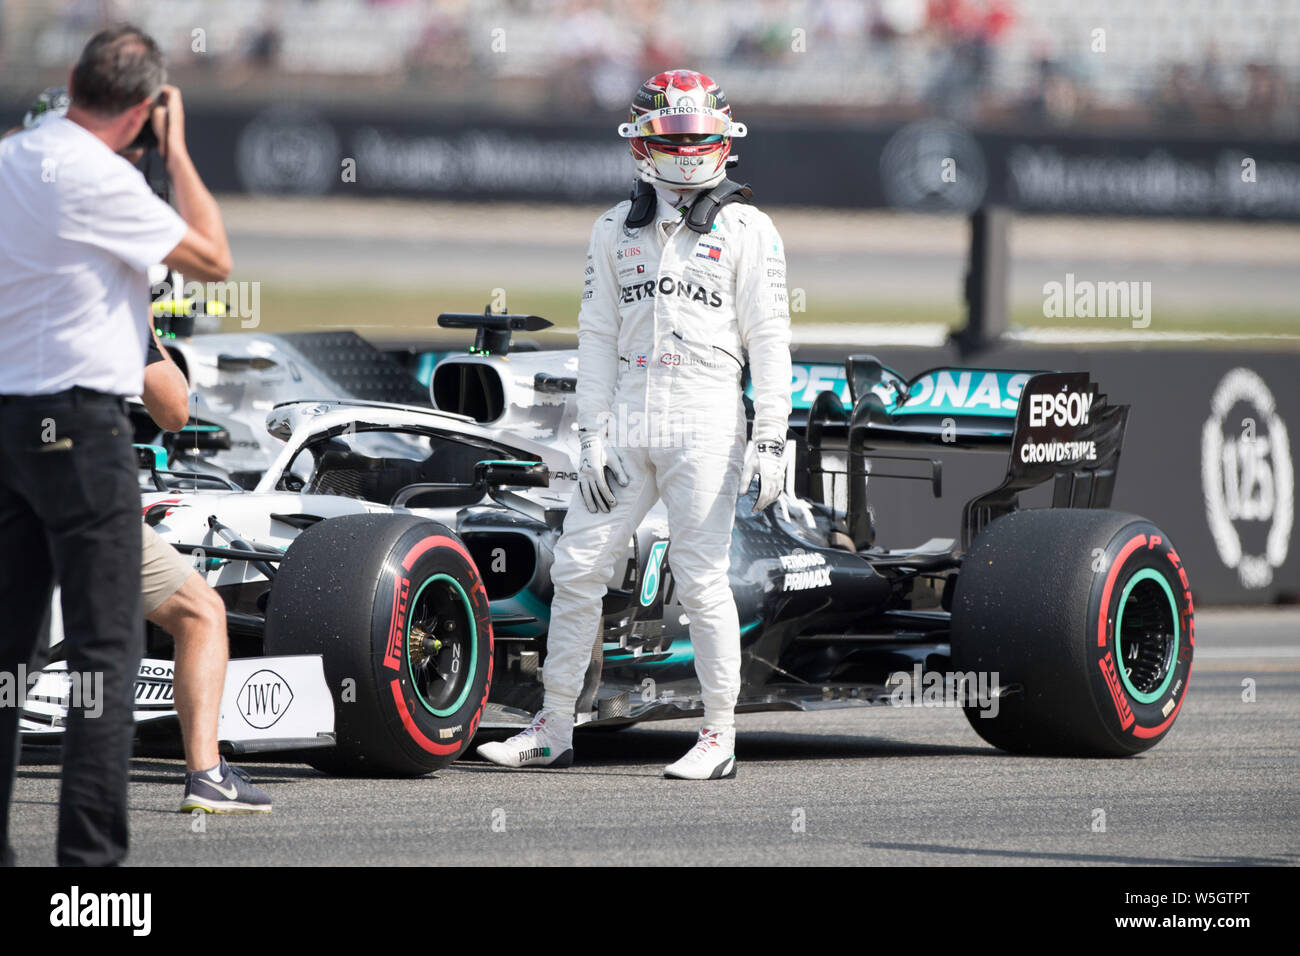 Lewis Hamilton, German Grand Prix 2019 I print by Motorsport Images